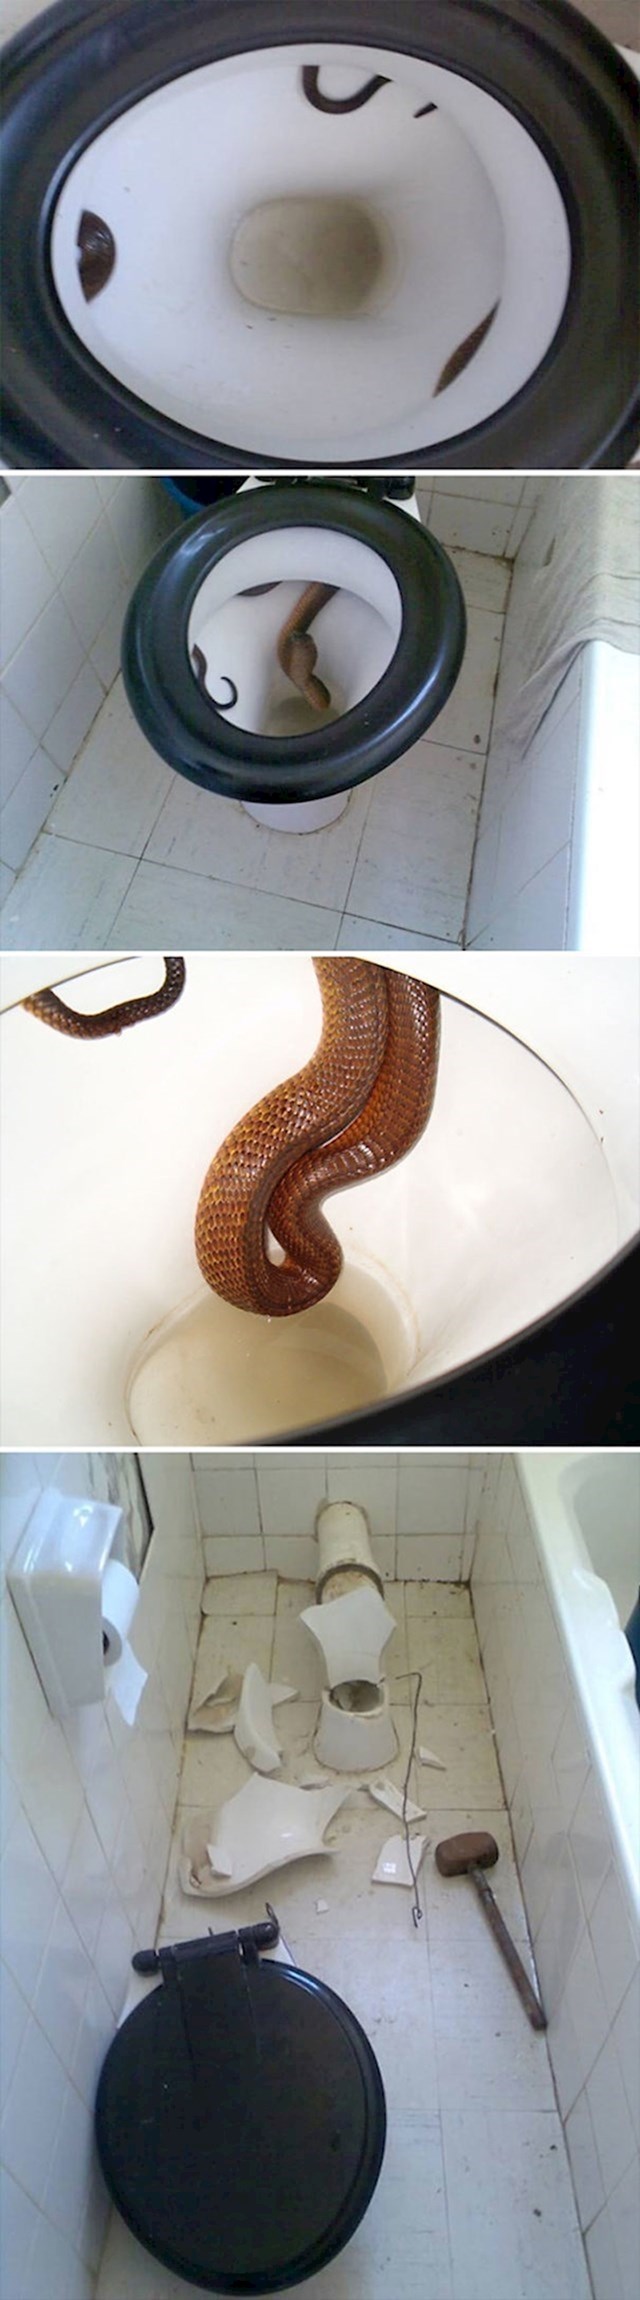 9. Zmija u WC-u...